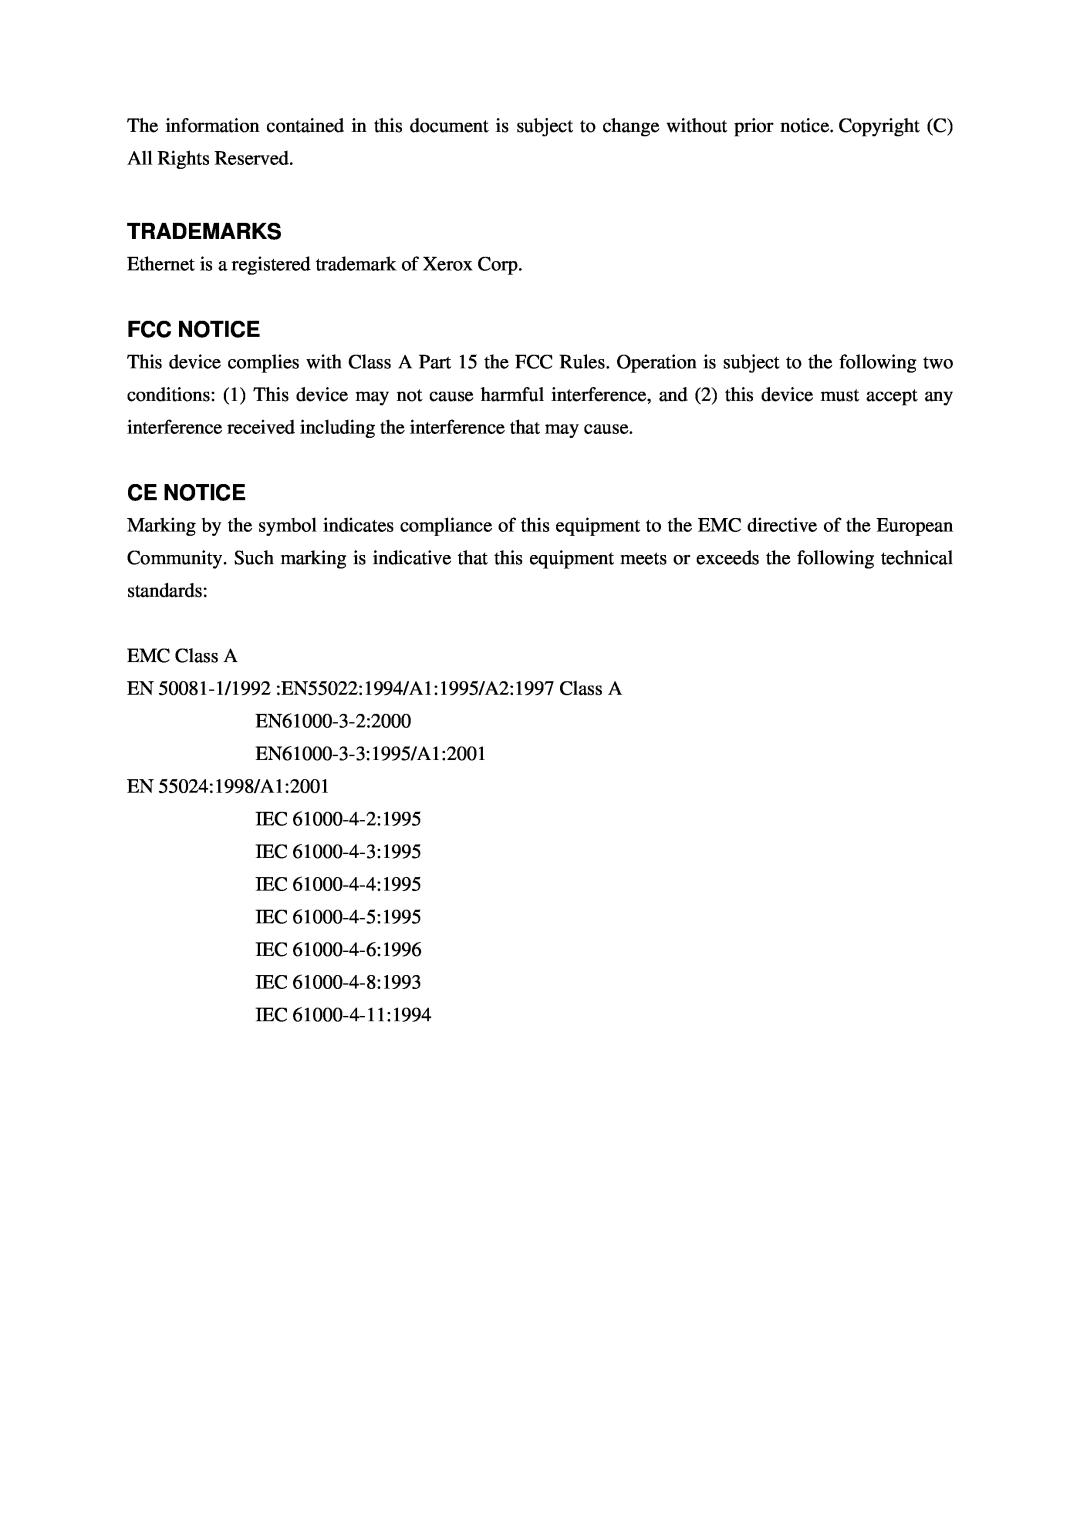 KTI Networks KPOE-800-2P, KPOE-800-1P manual Trademarks, Fcc Notice, Ce Notice 